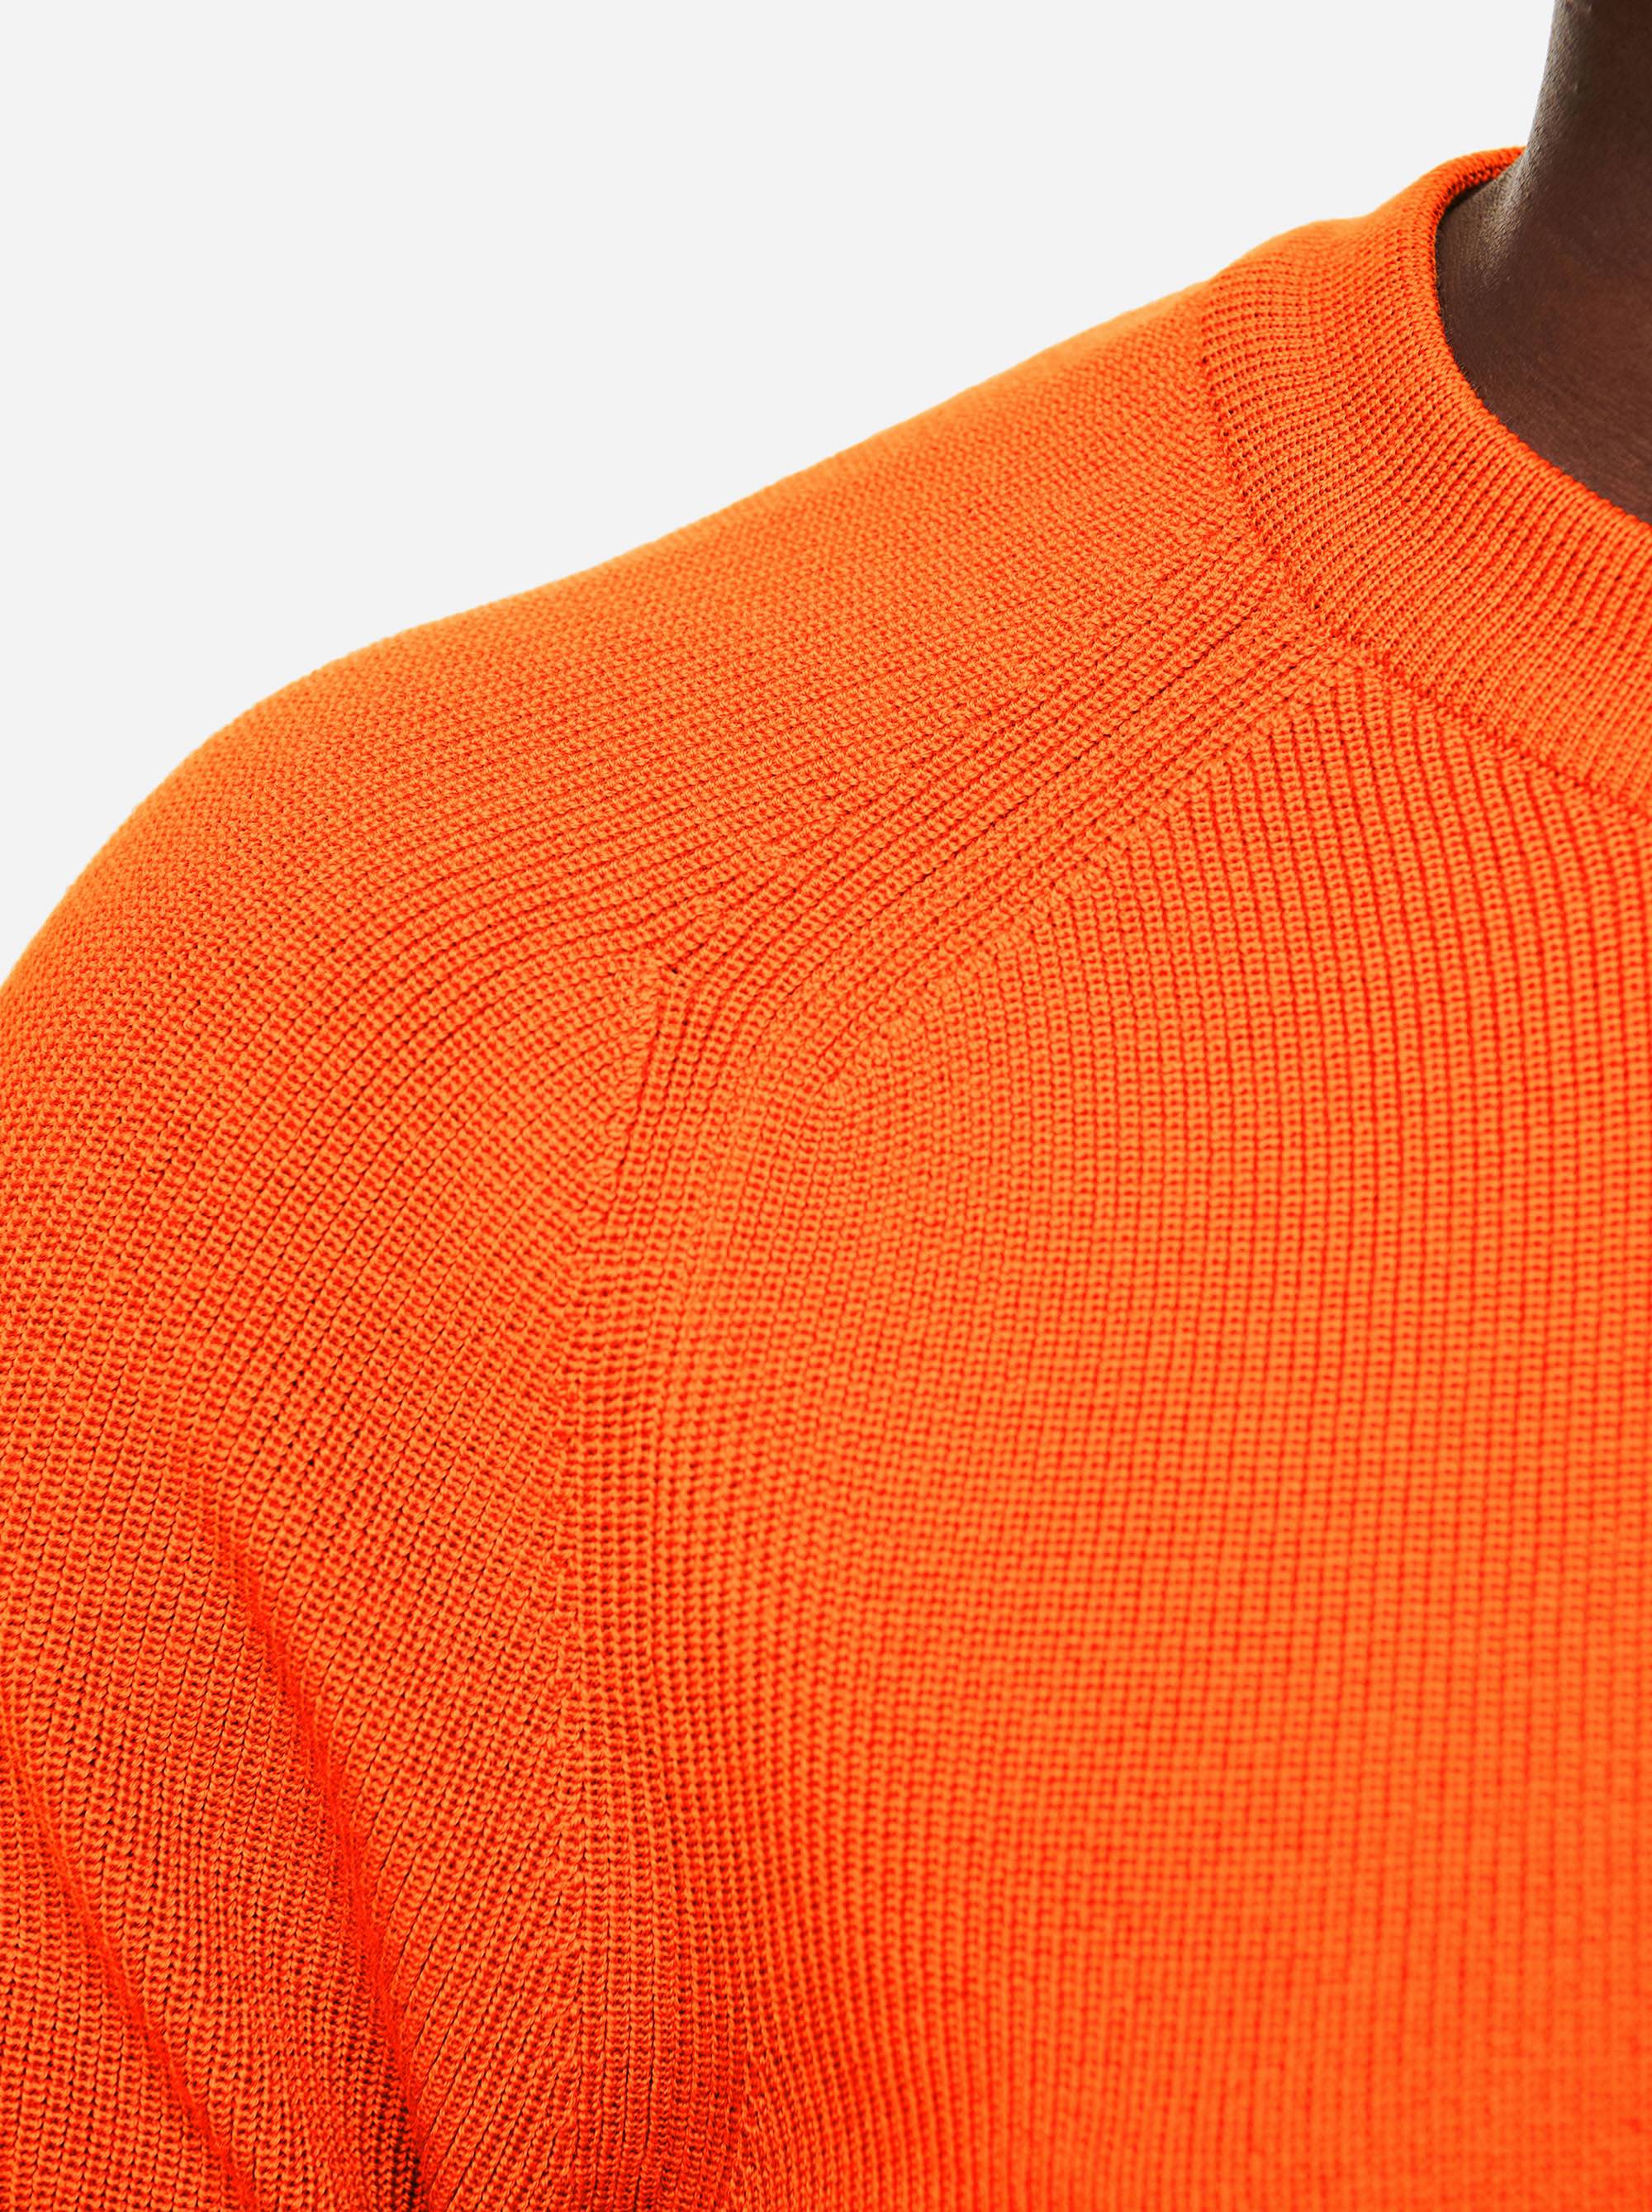 Teym - Crewneck - The Merino Sweater - Men - Orange - 2